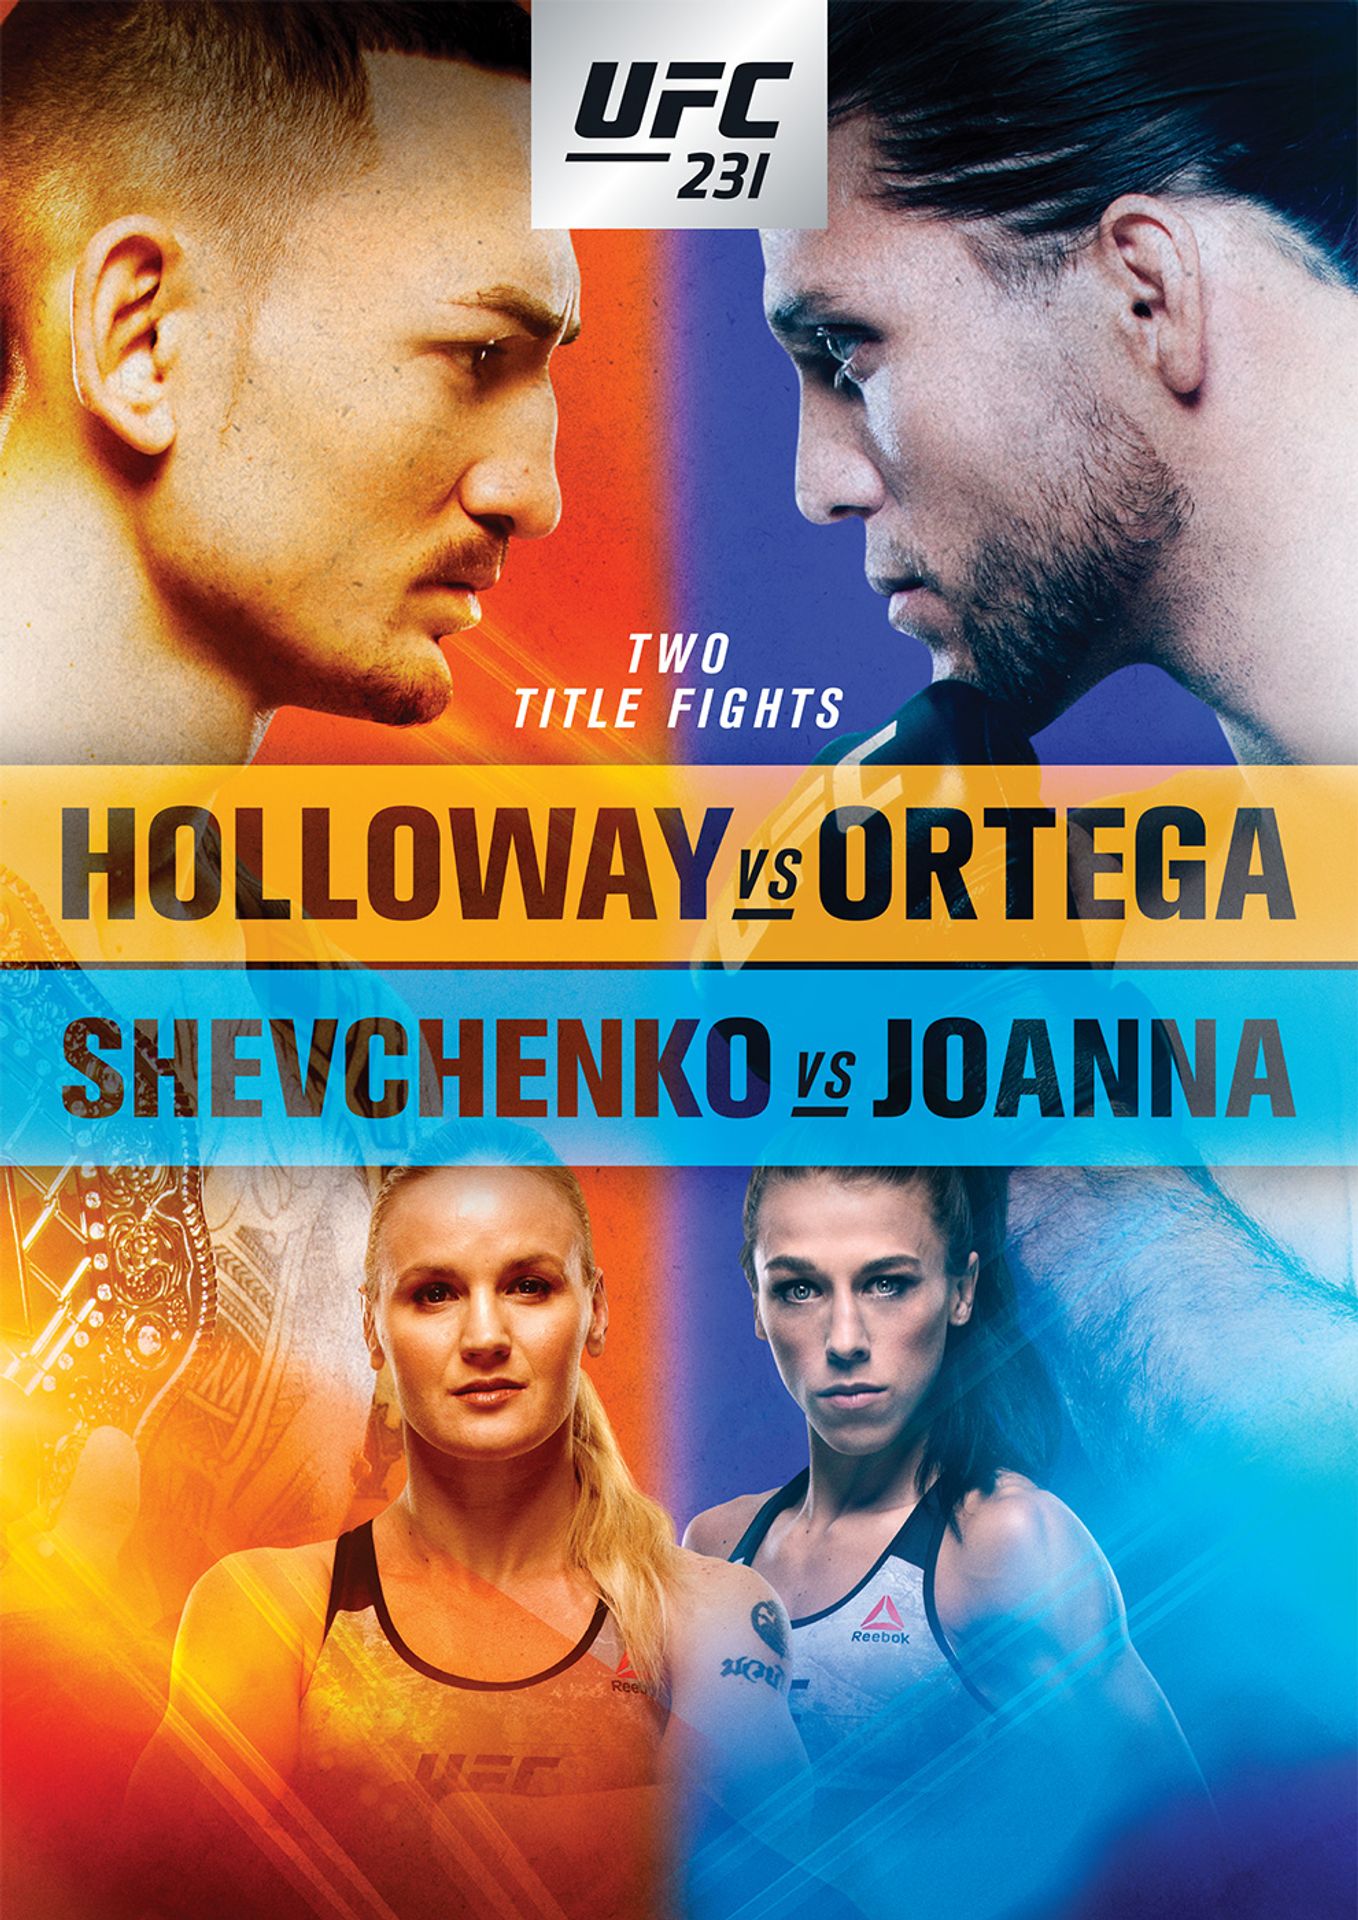 UFC-holloway-ortega - GALERIE: Rusové a jejich koberce (9/11)